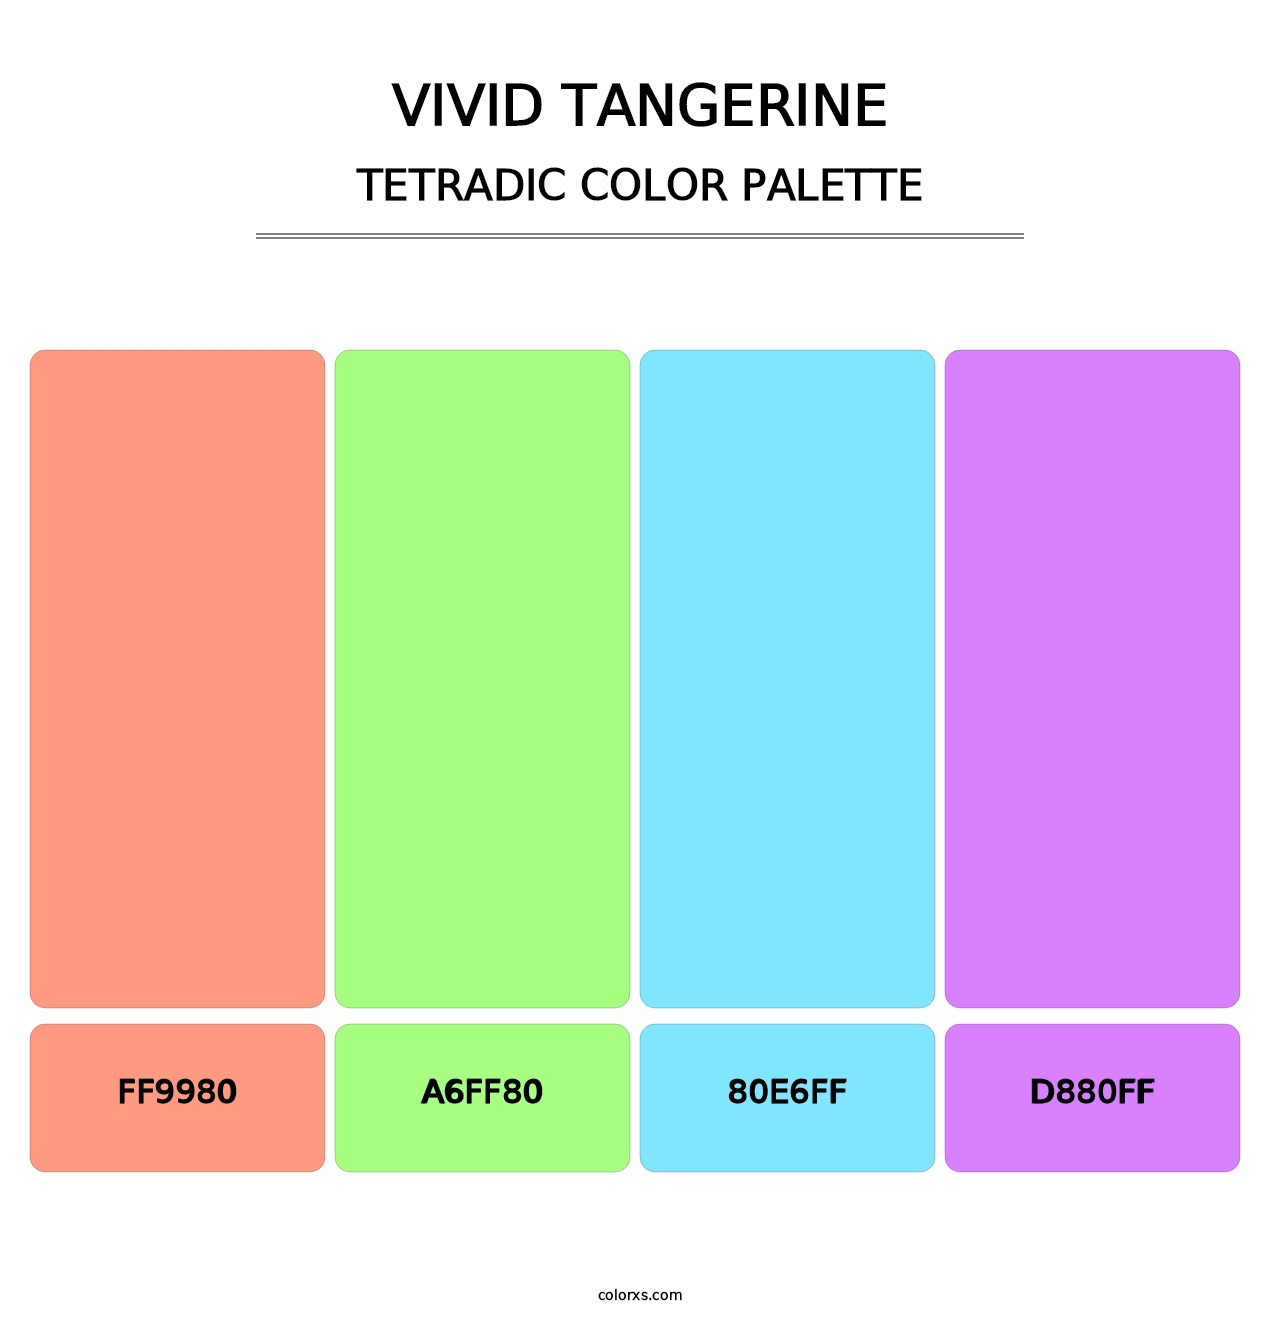 Vivid Tangerine - Tetradic Color Palette